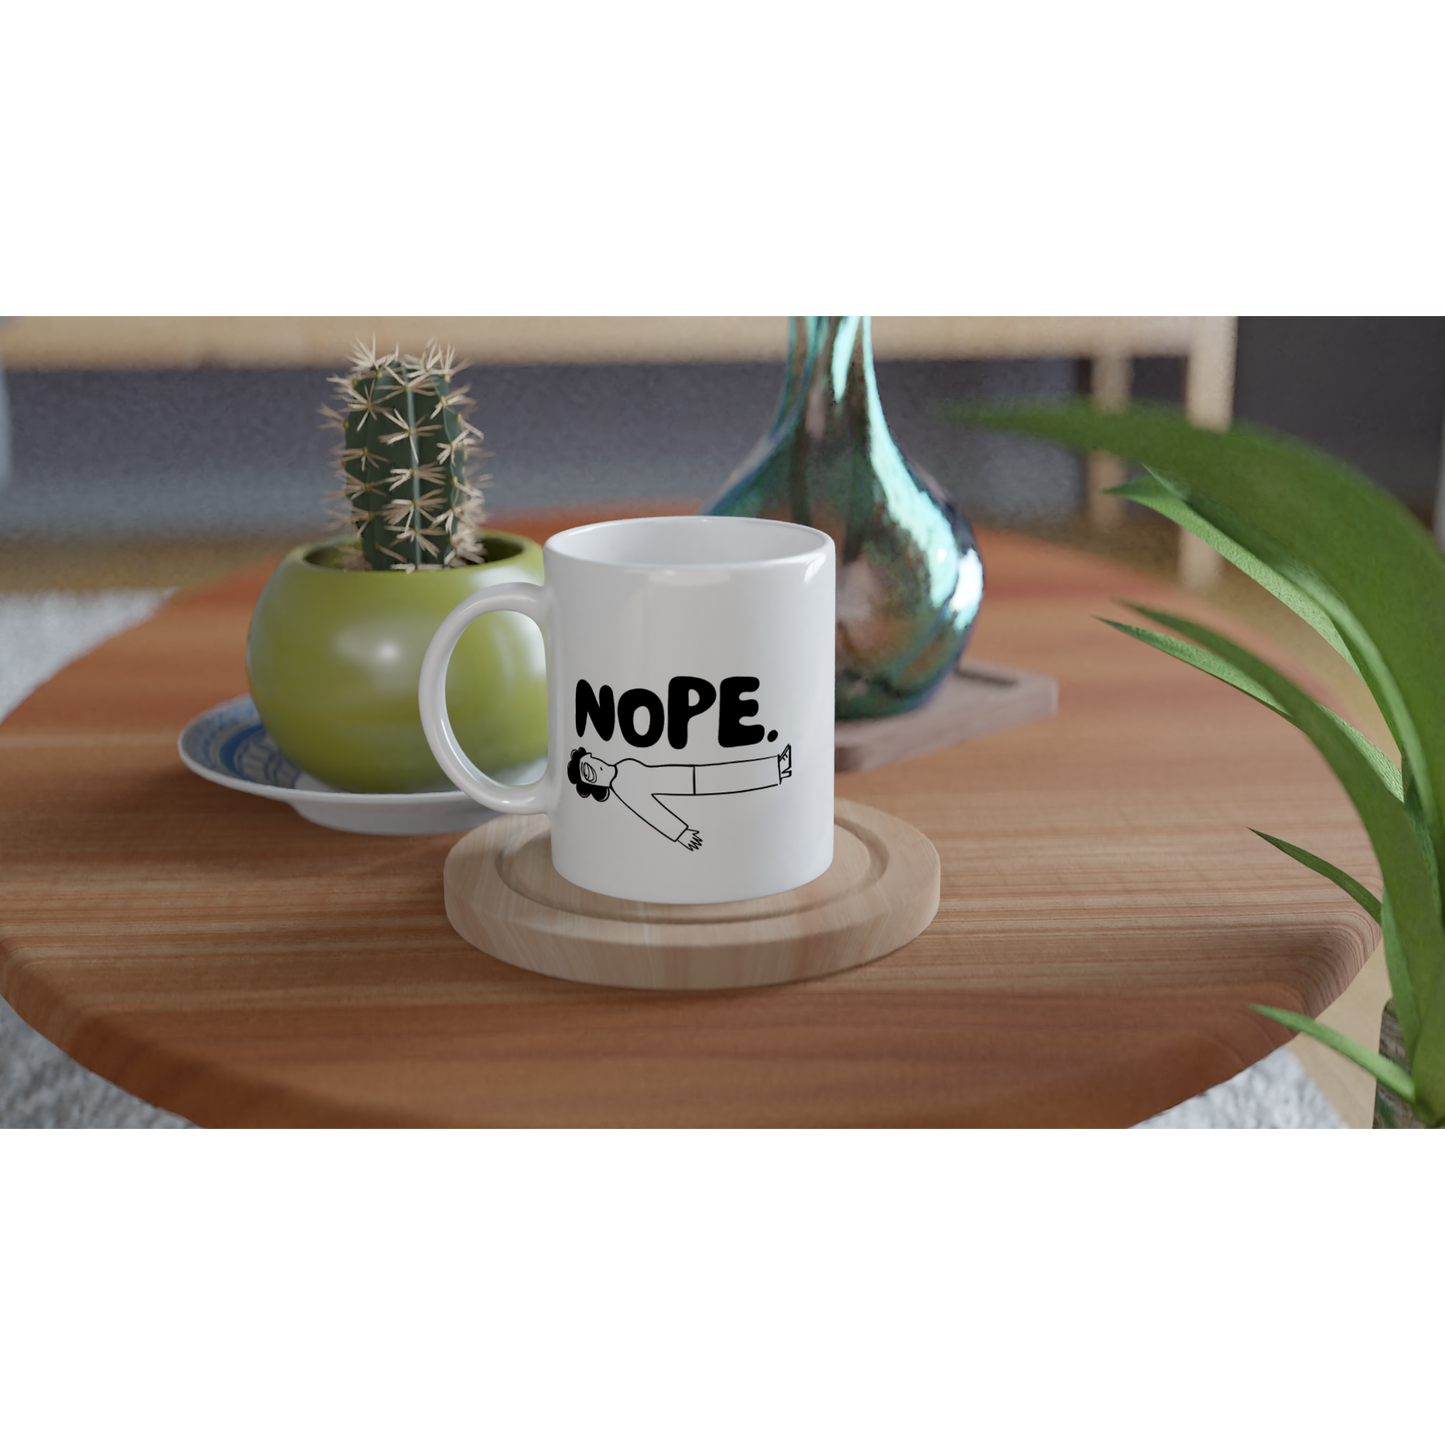 NOPE - White 11oz Ceramic Mug